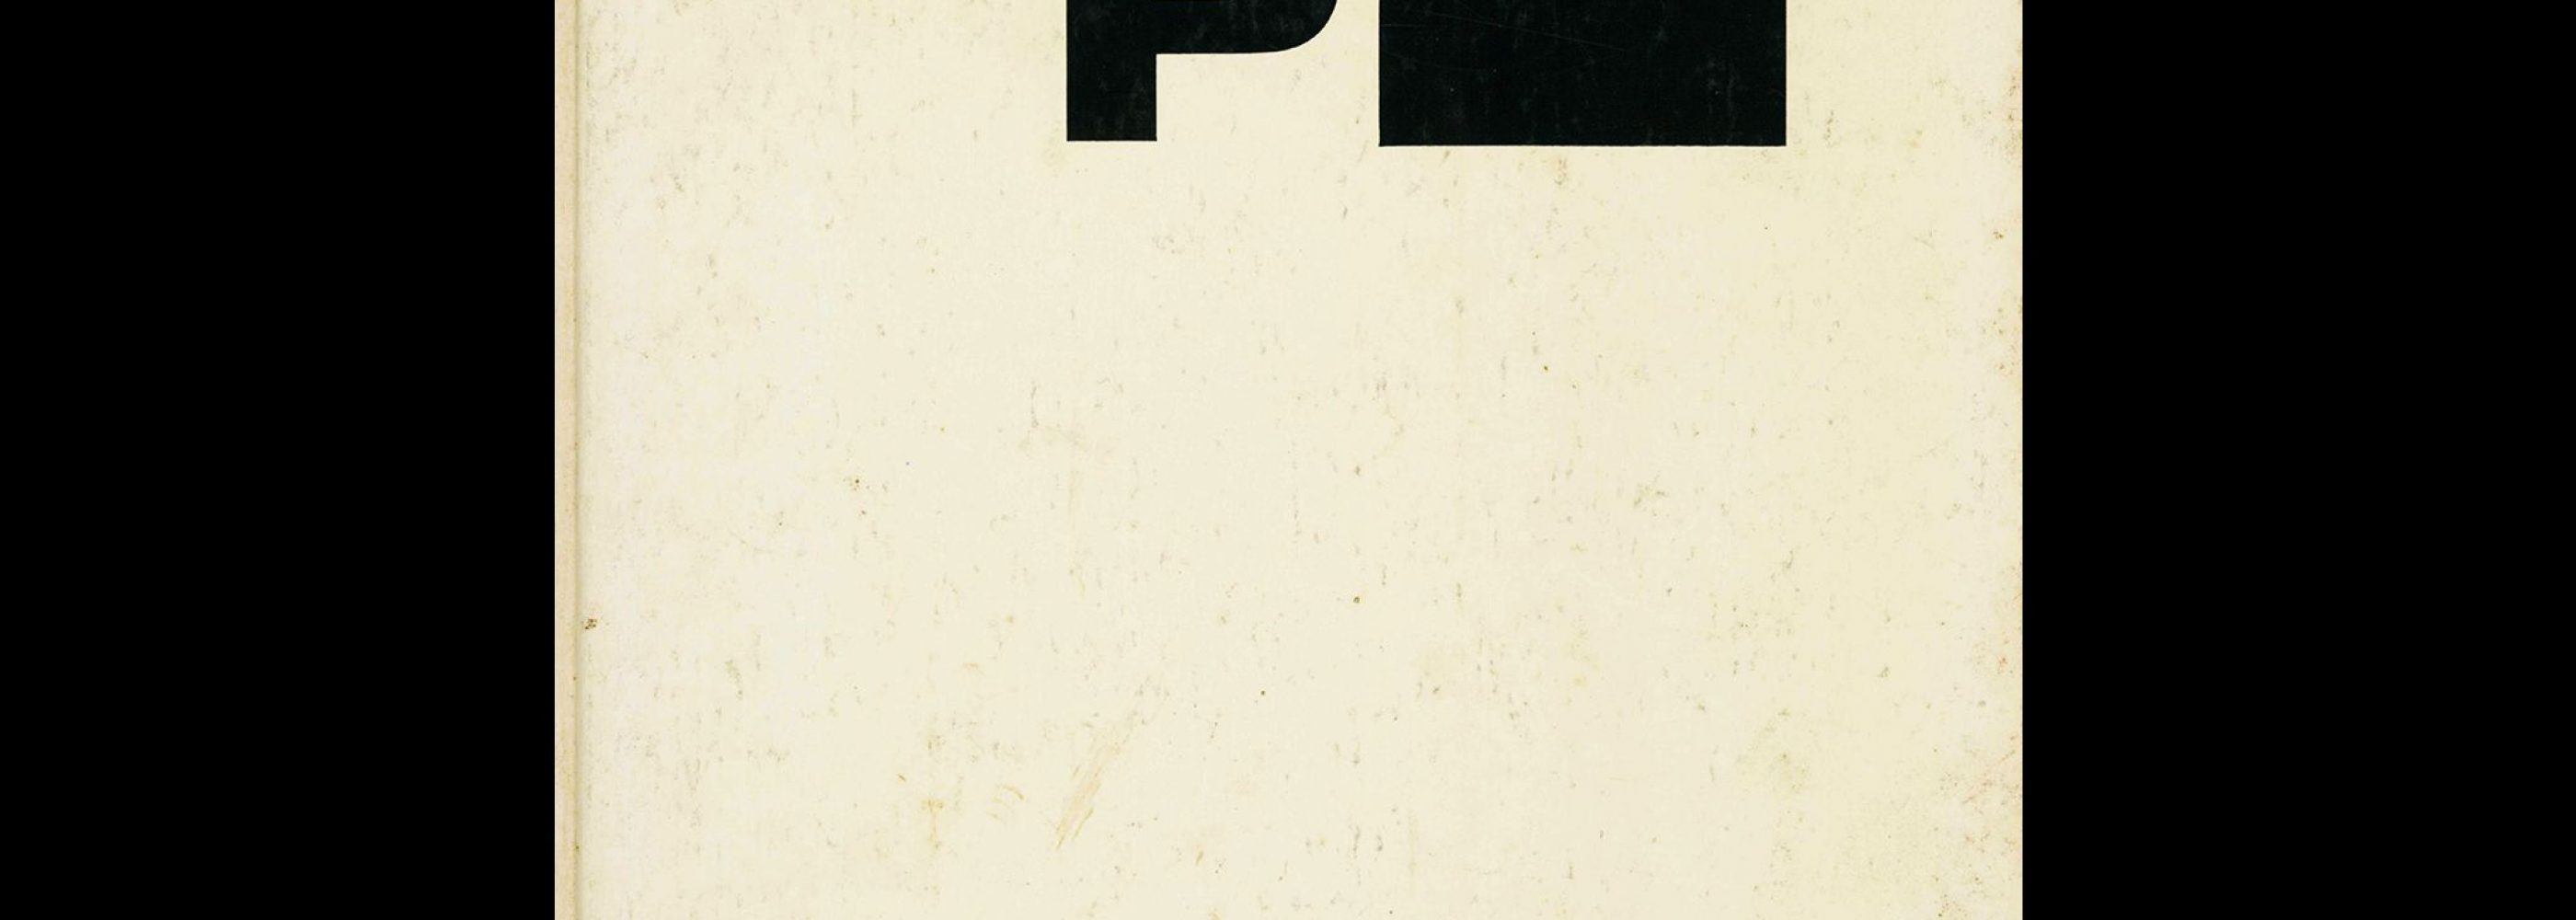 Piet Zwart, Verlag Arthur Niggli AG, 1966